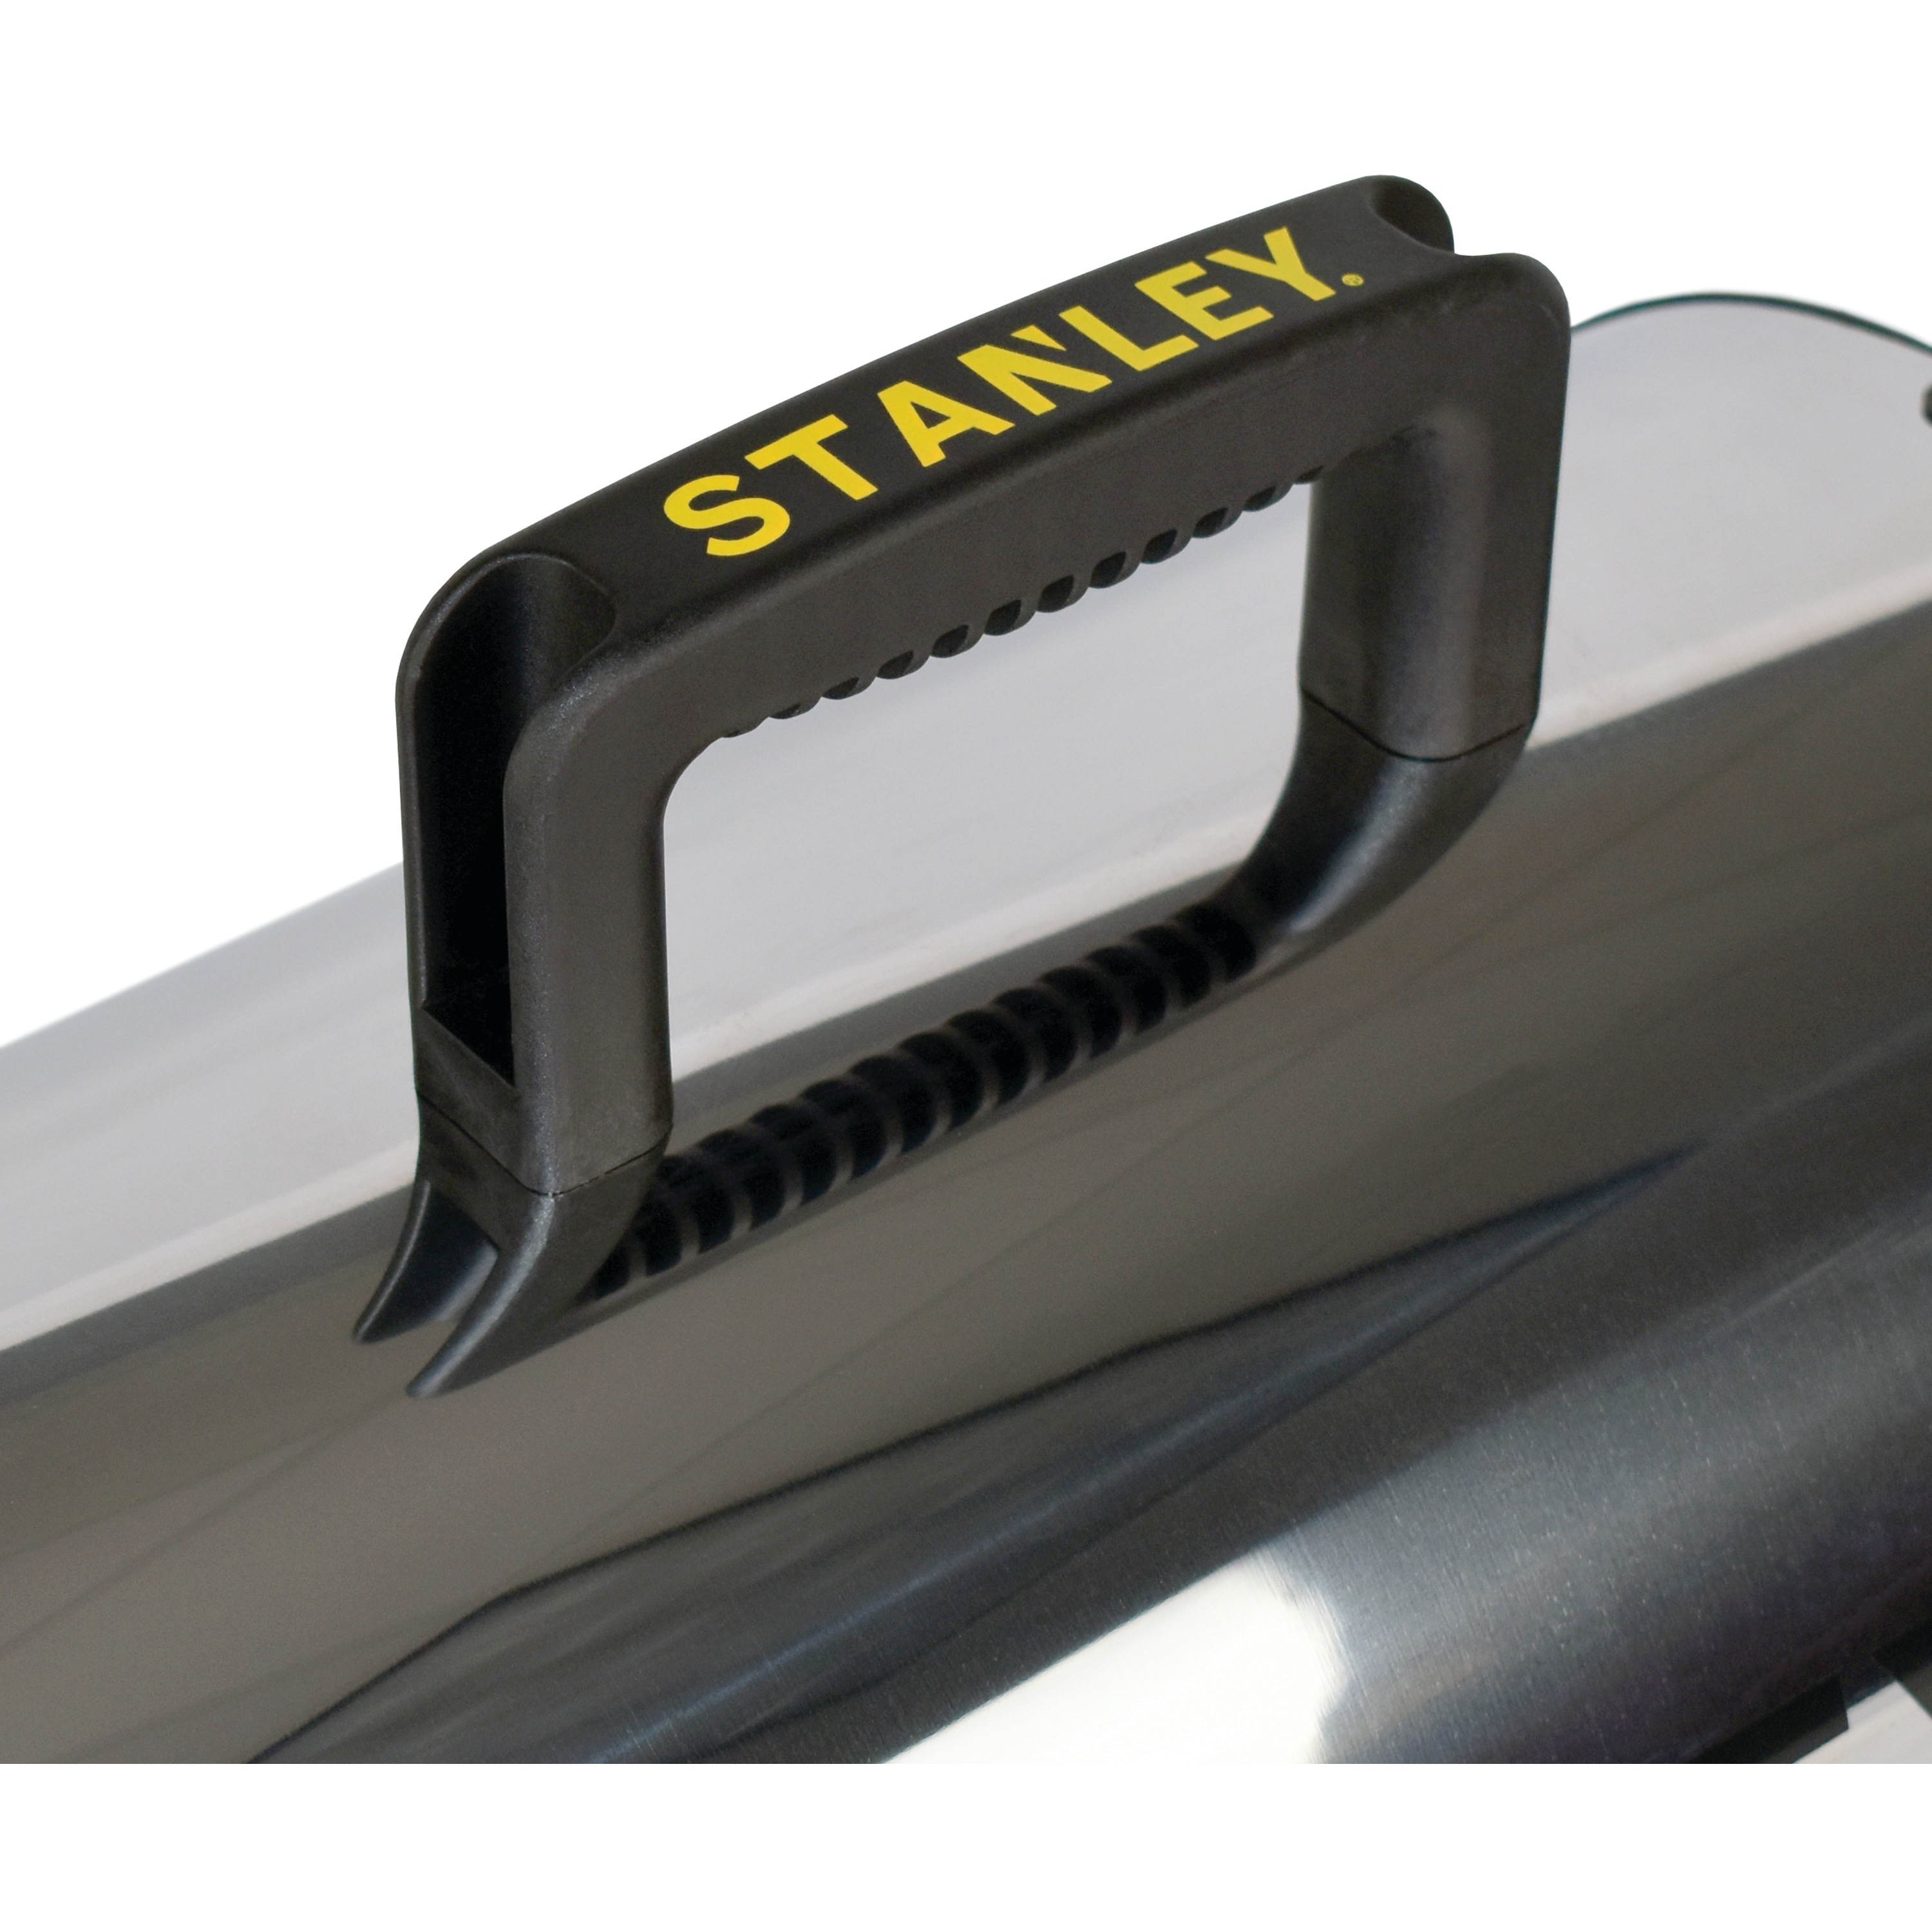 Stanley Tools - Gas Forced Air Heater  60000 BTU - ST-60HB2-GFA